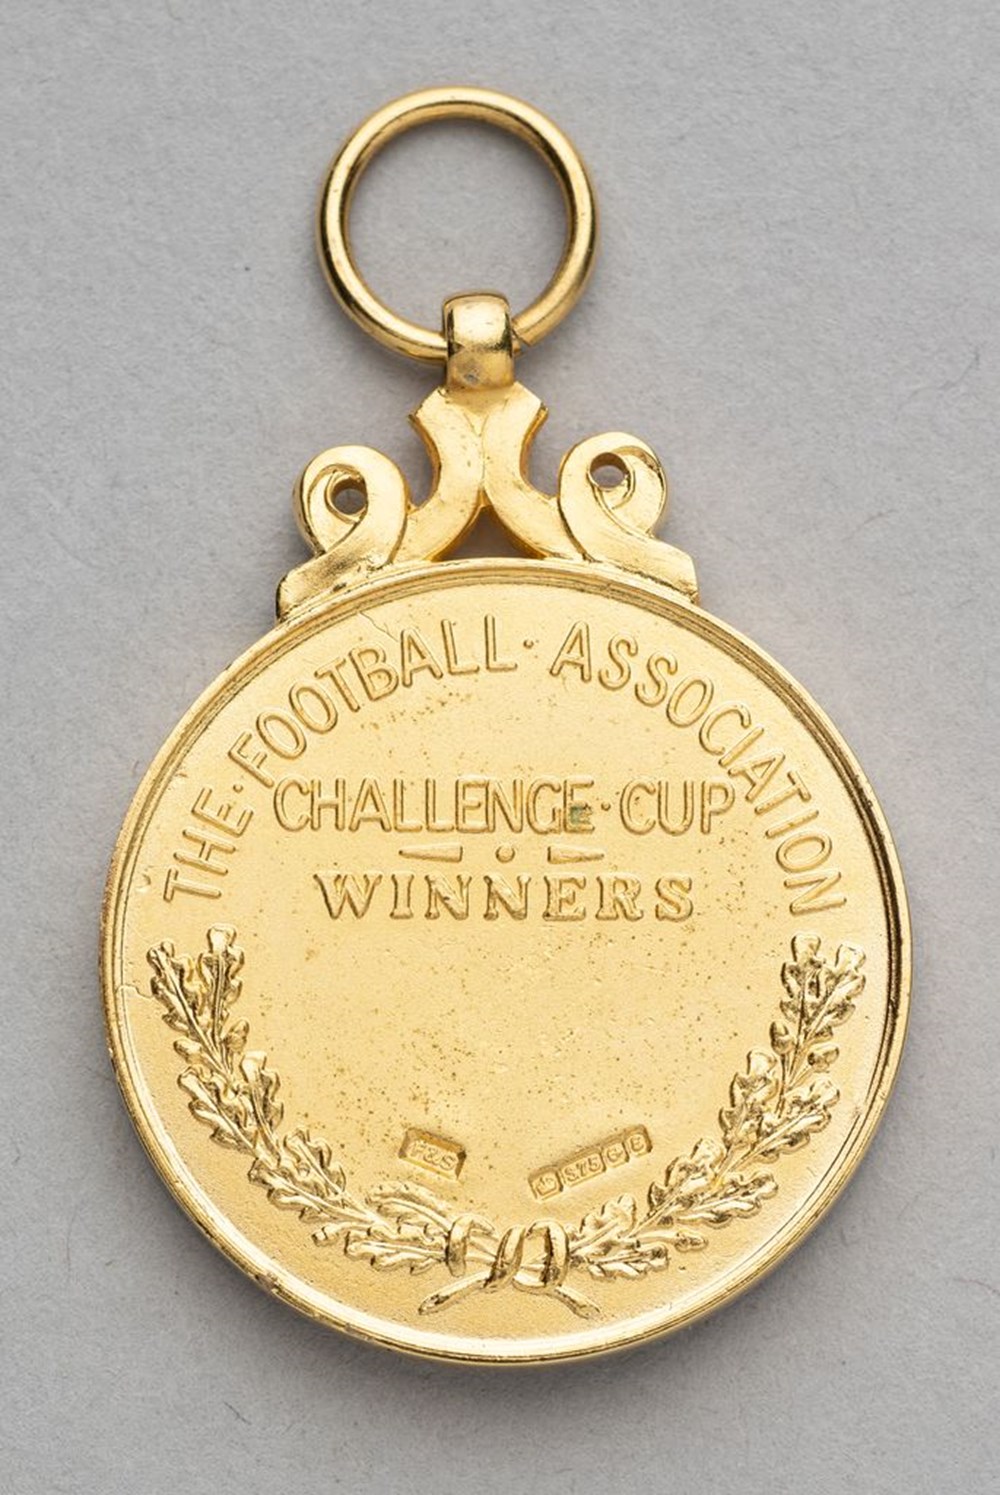 Alan Sunderland's 1979 F.A. Cup winner's medal